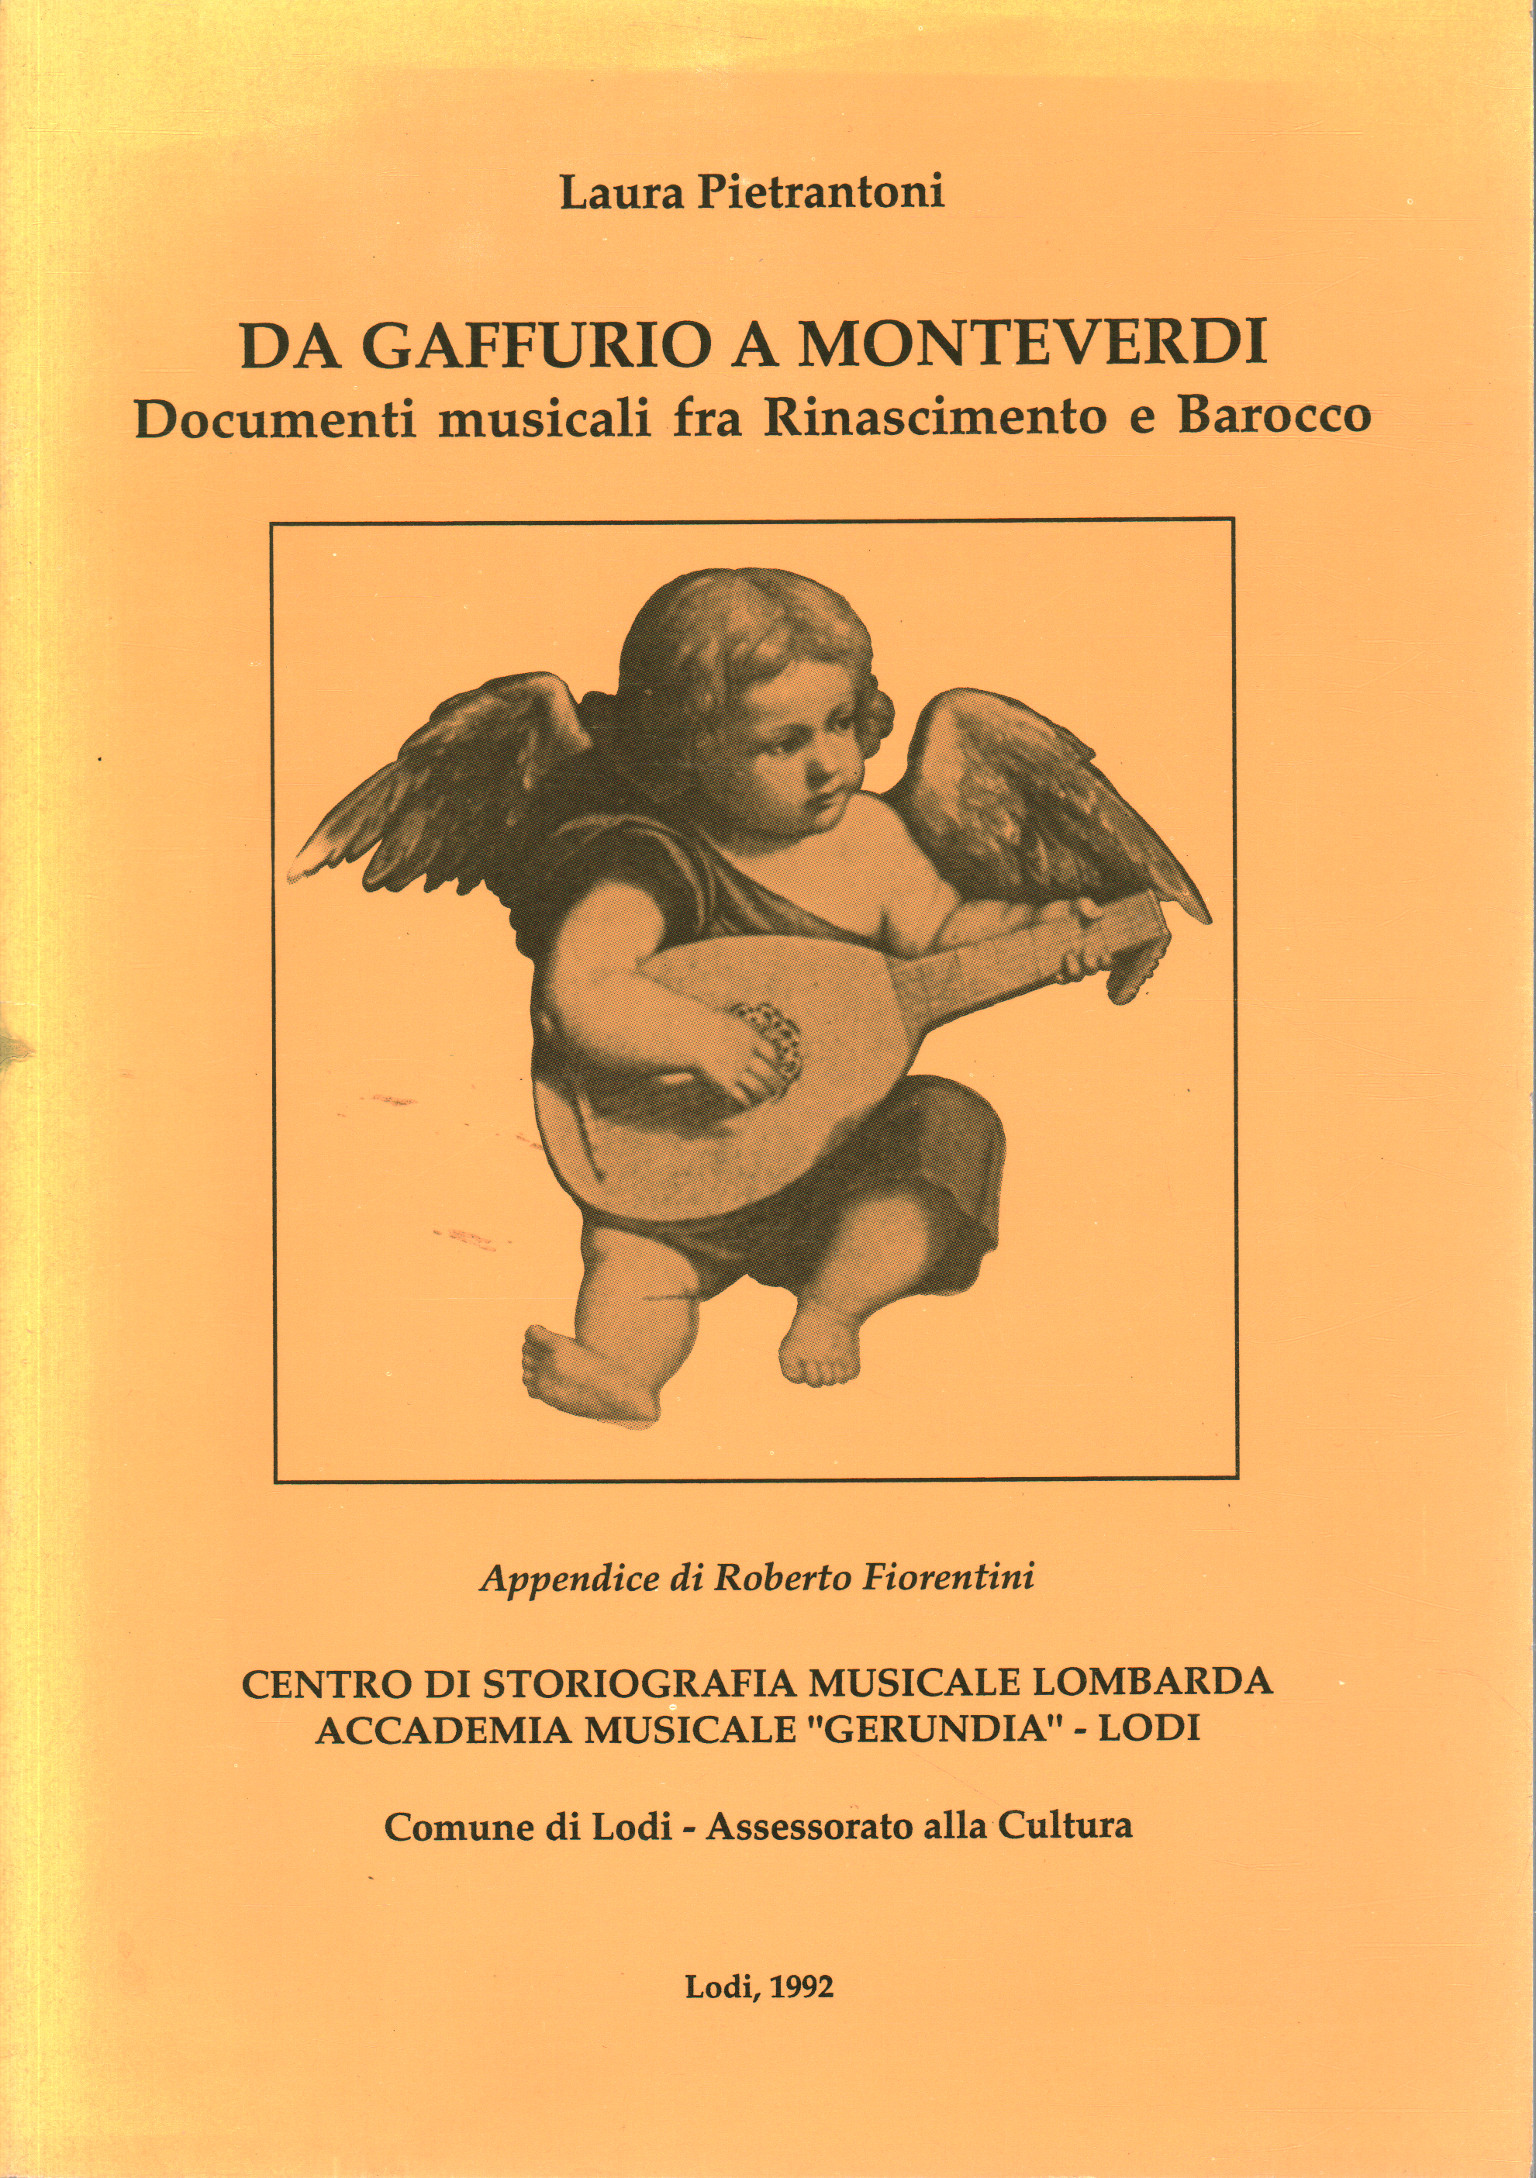 From Gaffurio to Monteverdi, Laura Pietrantoni